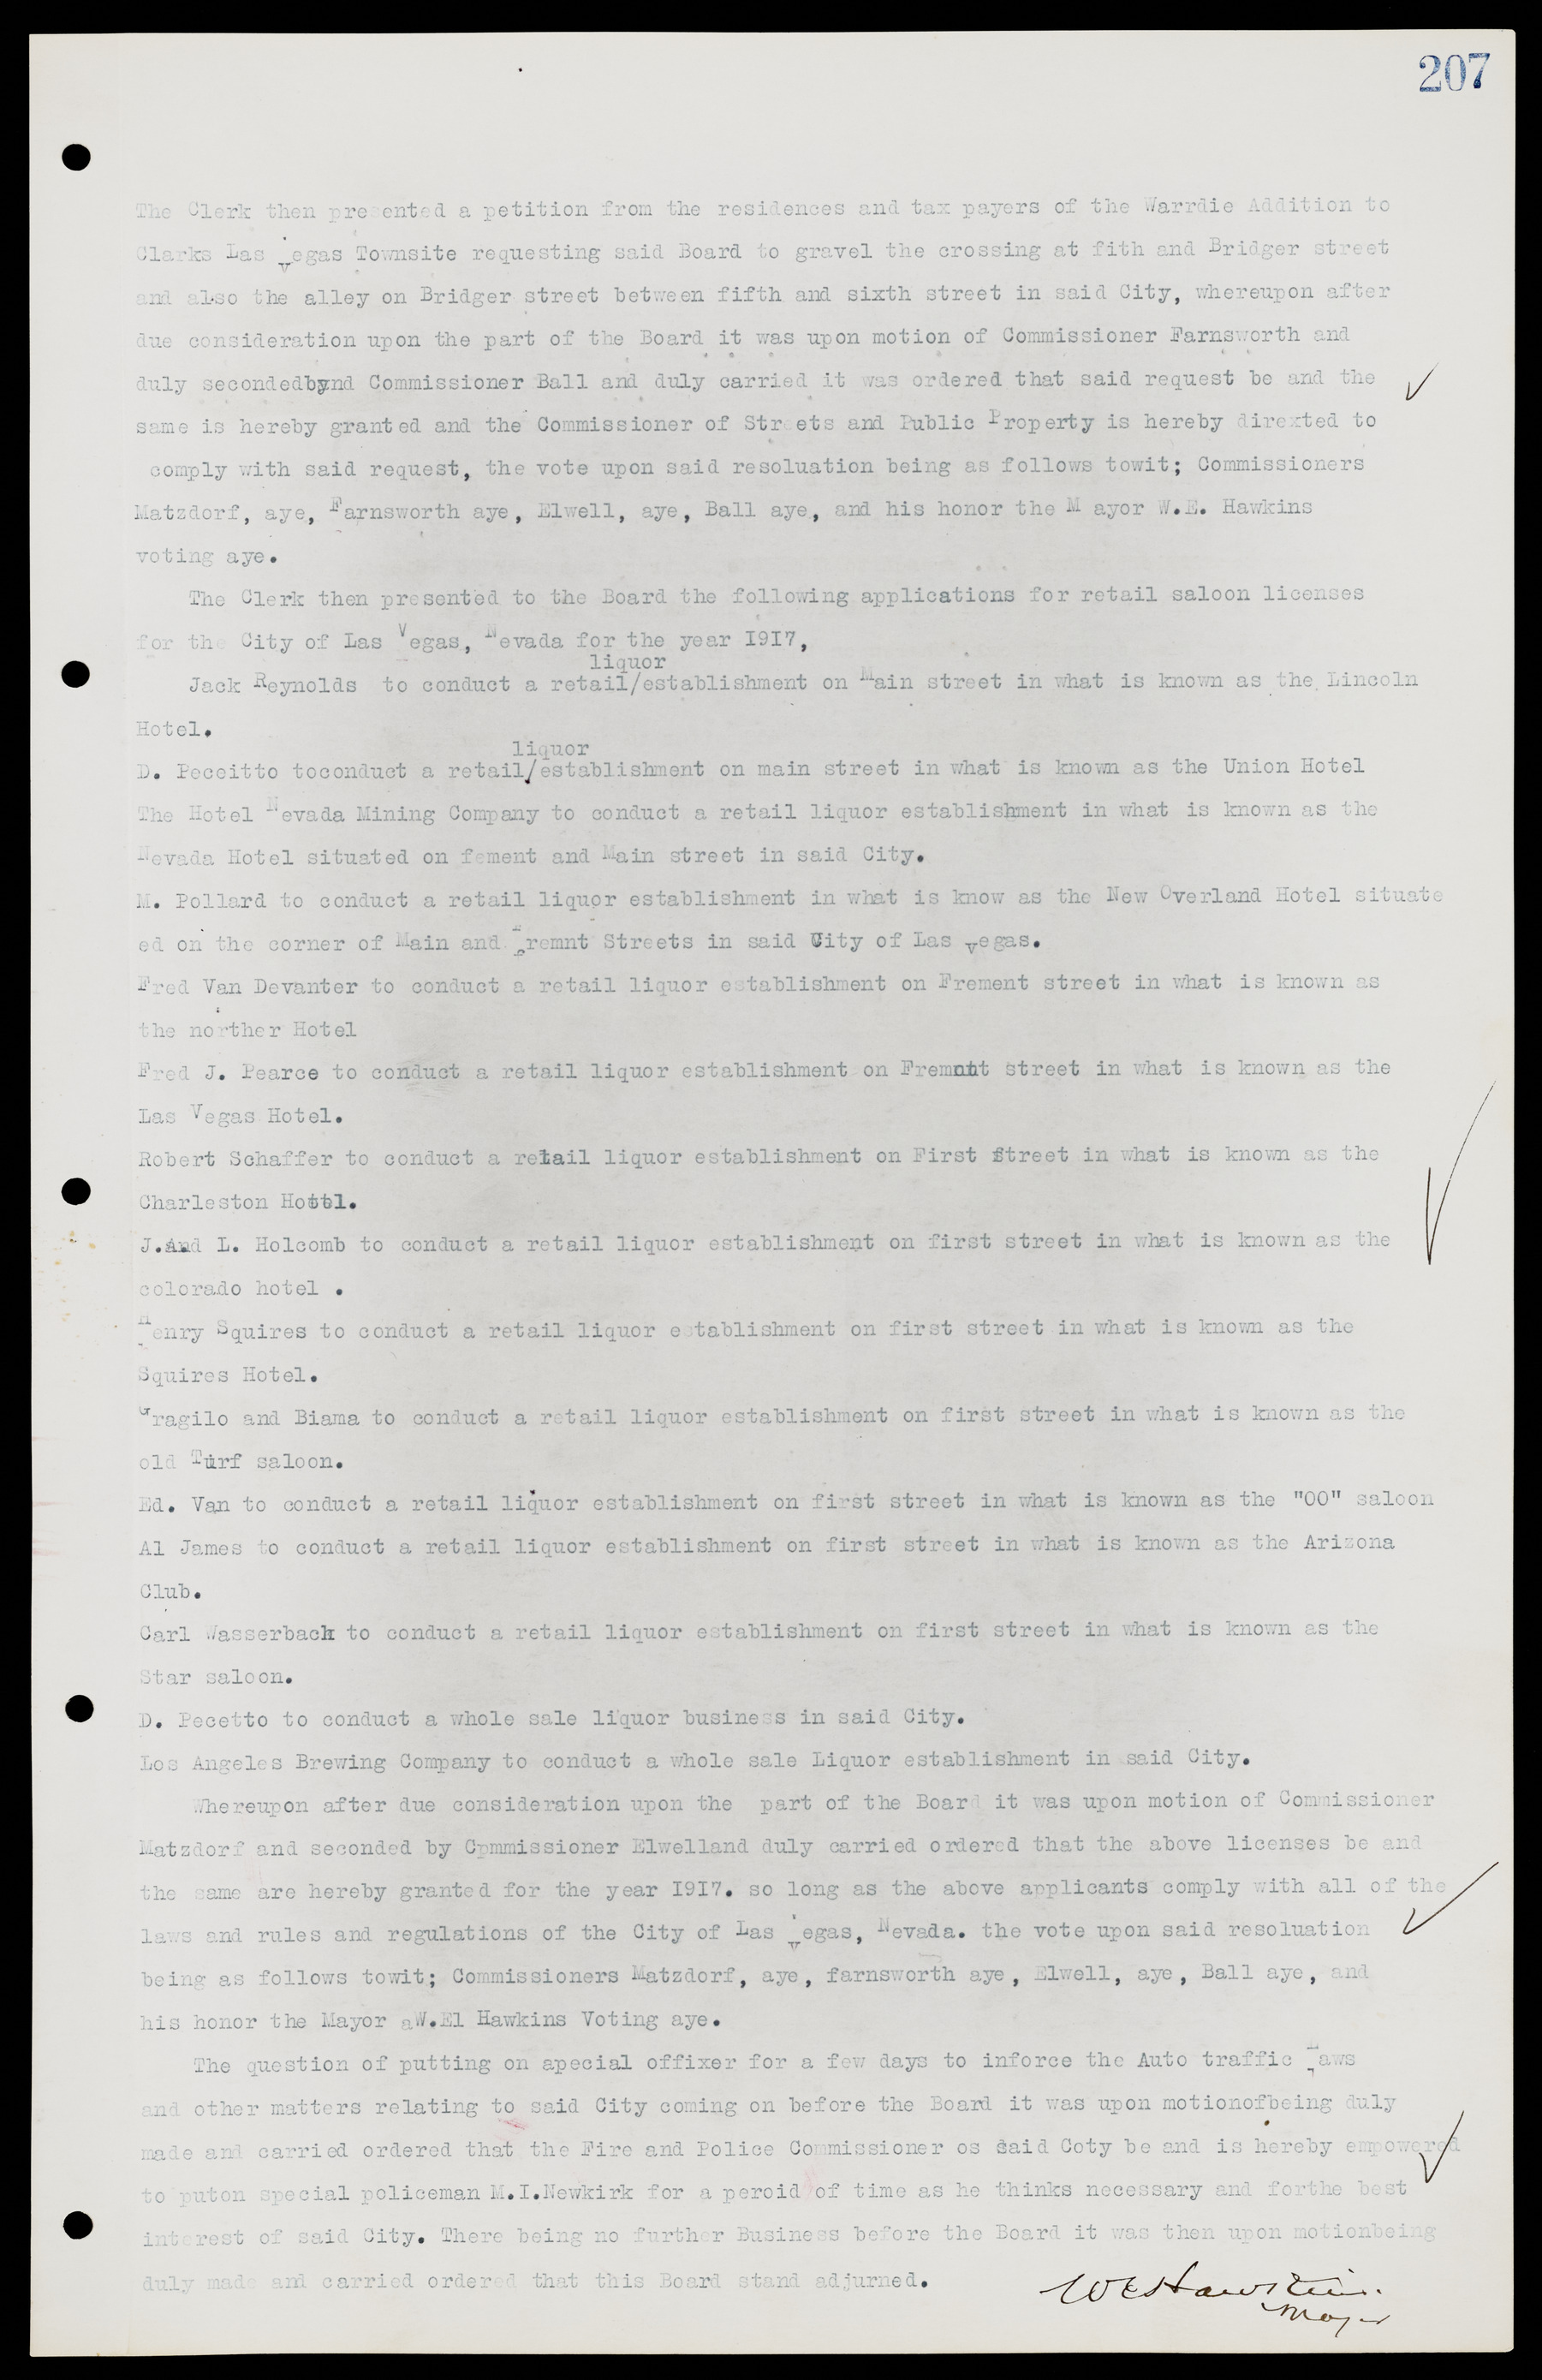 Las Vegas City Commission Minutes, June 22, 1911 to February 7, 1922, lvc000001-223